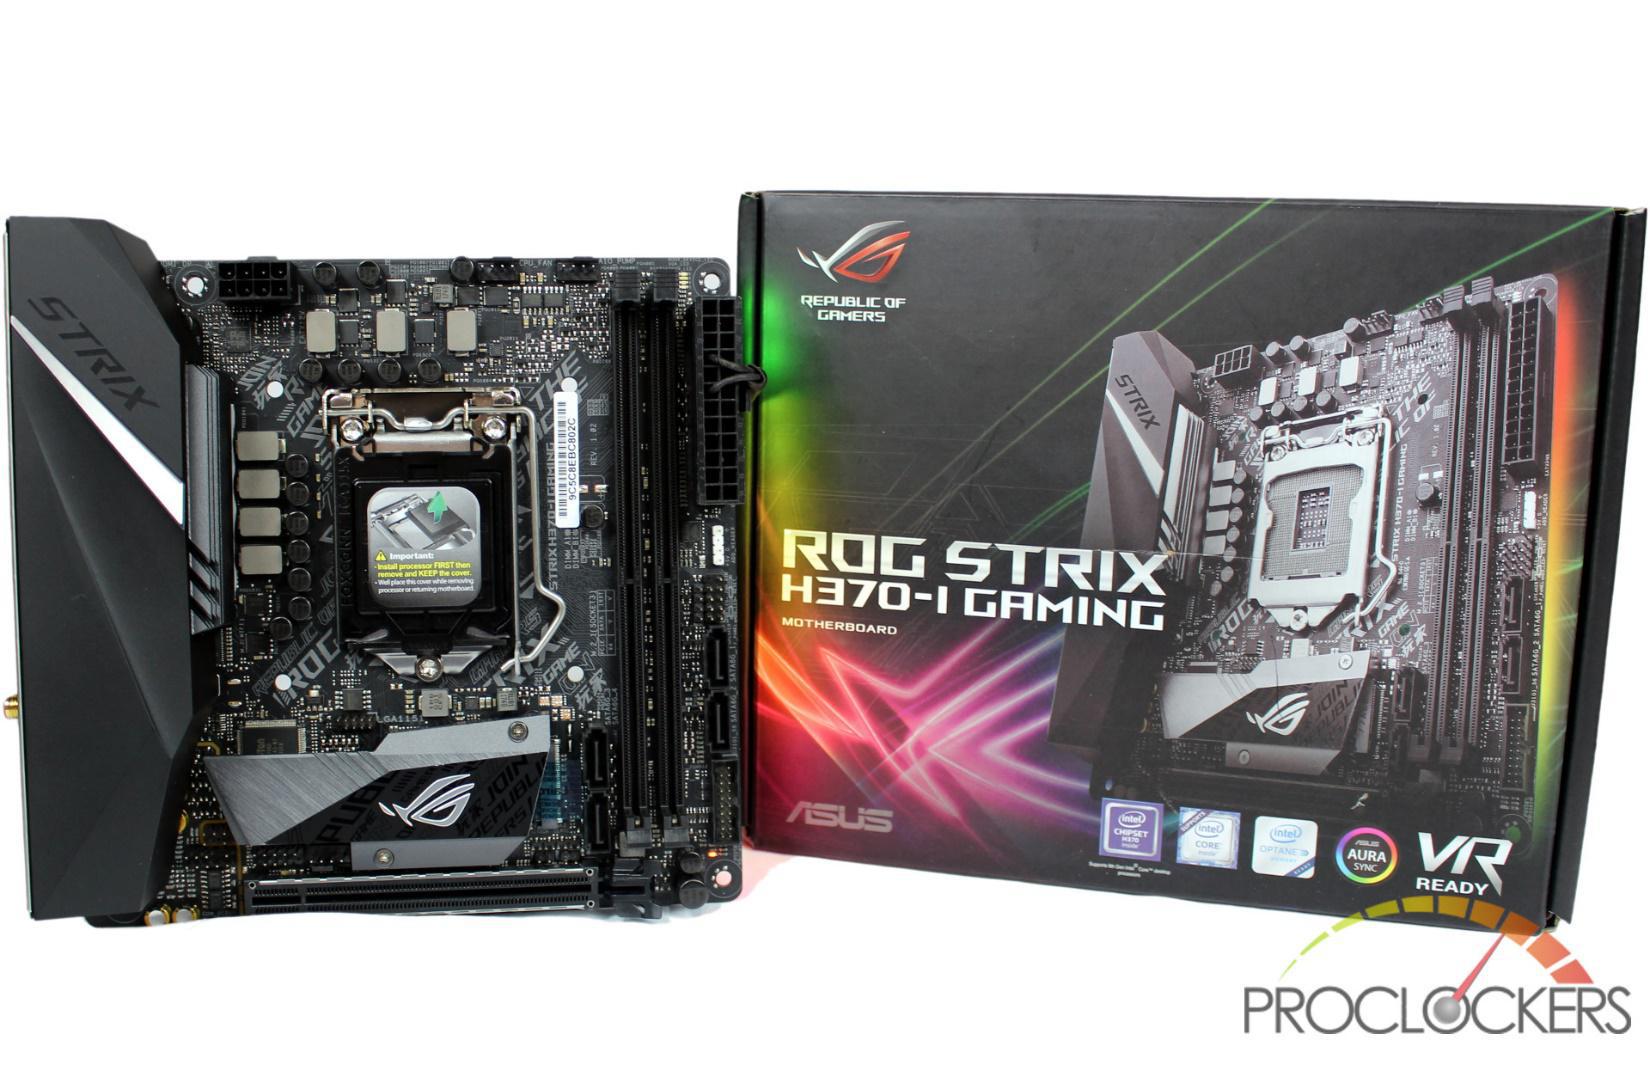 Asus Rog Strix H370 I Gaming Motherboard Review Proclockers